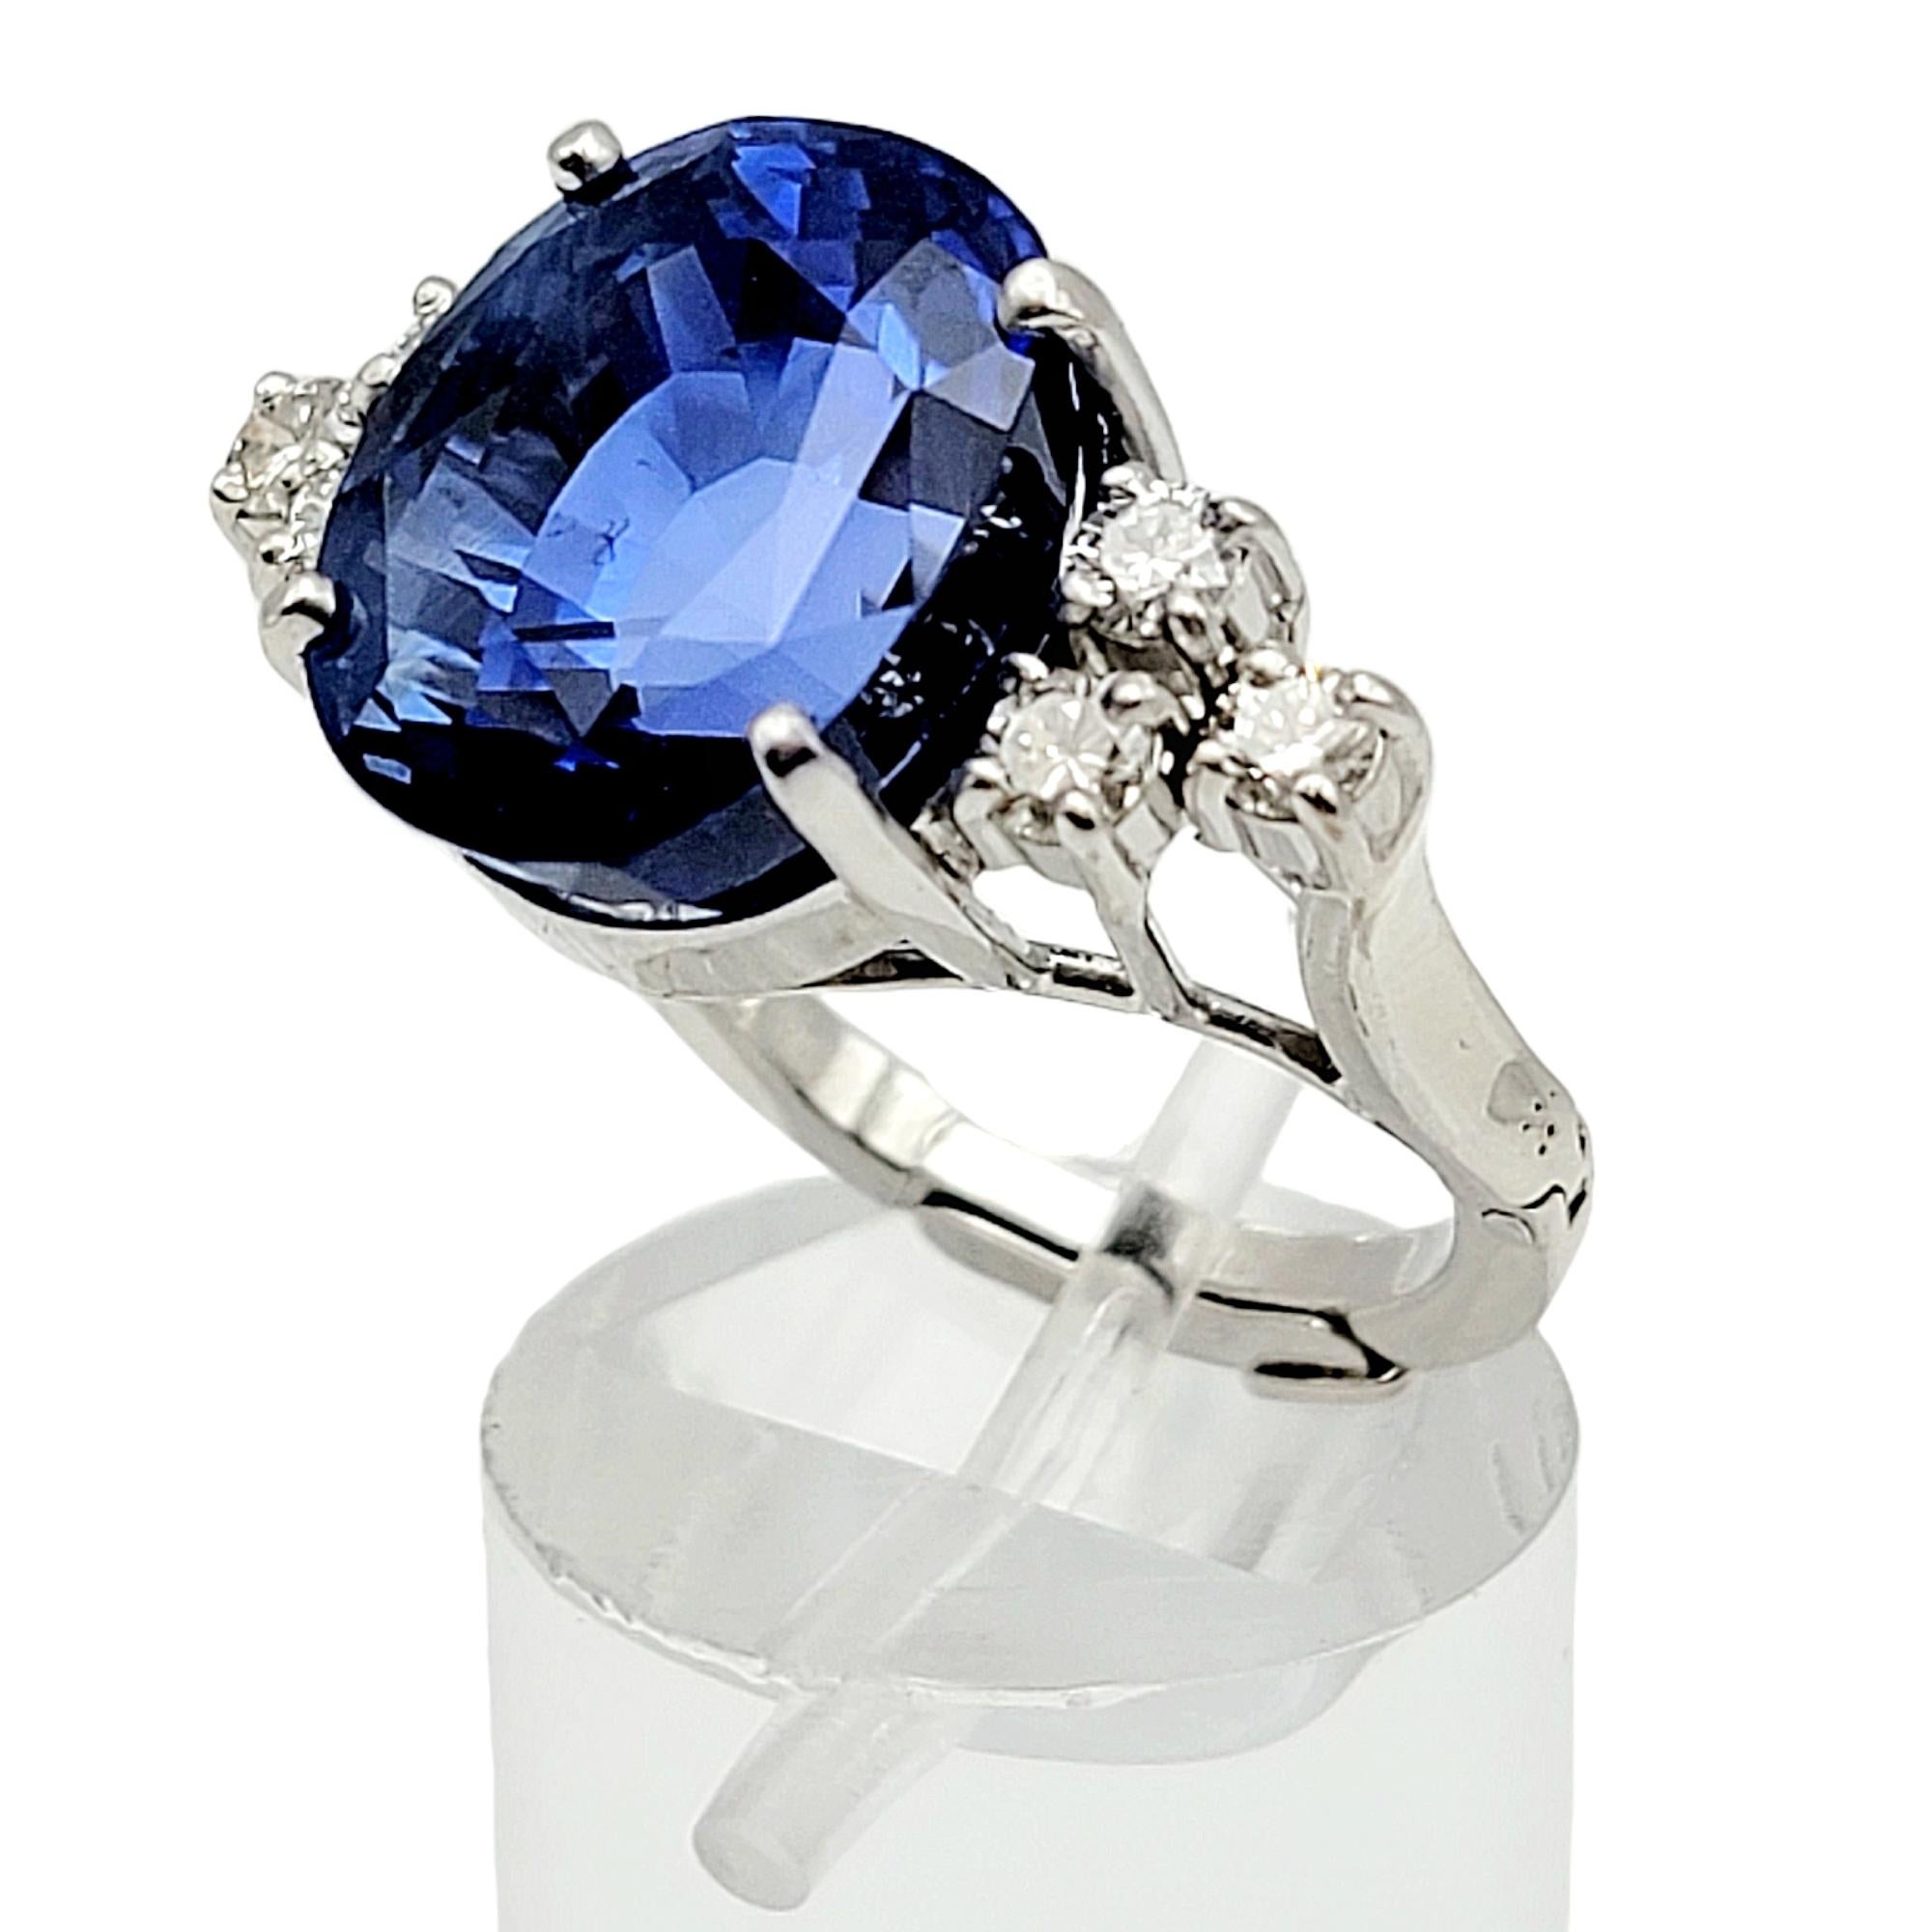 Impressive 15.35 Carat Rare Untreated Oval Ceylon Sapphire and Diamond Ring For Sale 5